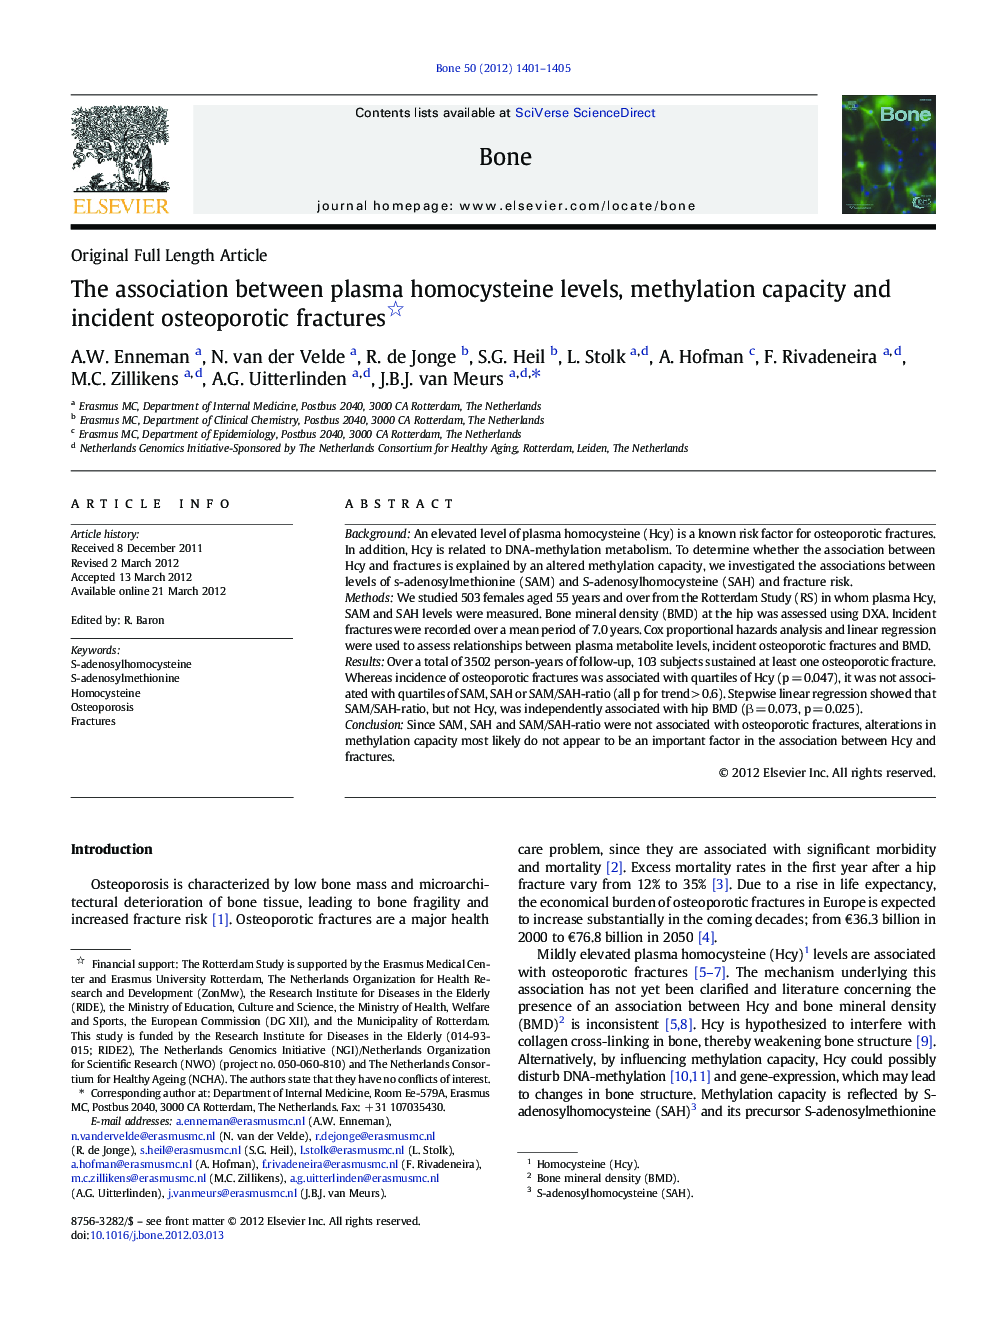 Original Full Length ArticleThe association between plasma homocysteine levels, methylation capacity and incident osteoporotic fractures